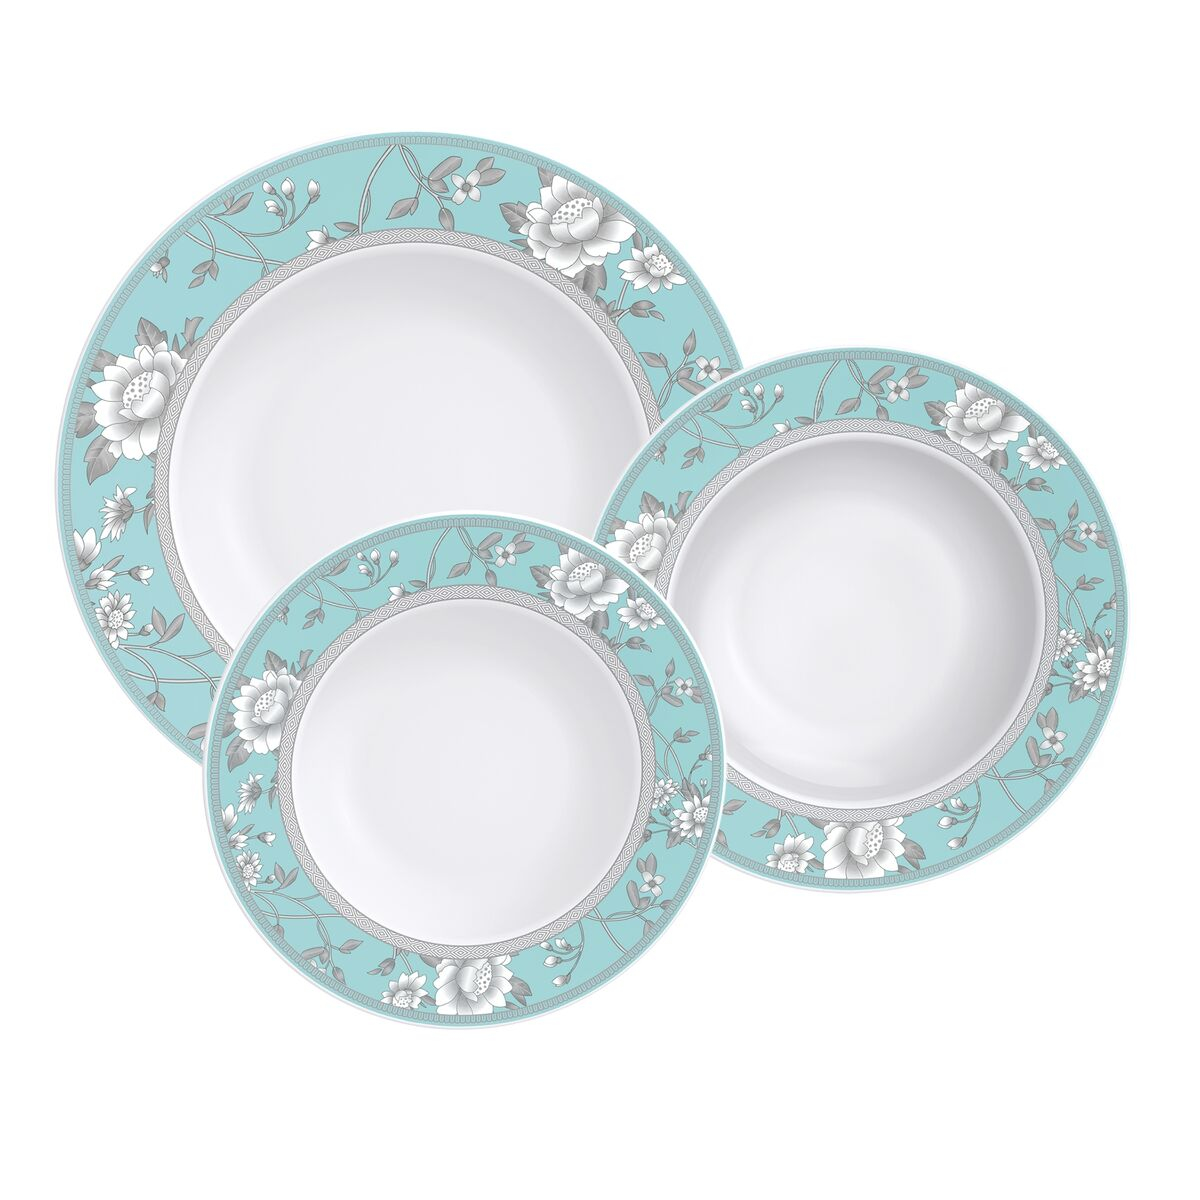 Tramontina Helen 18-Piece Decorated Porcelain Tableware Set